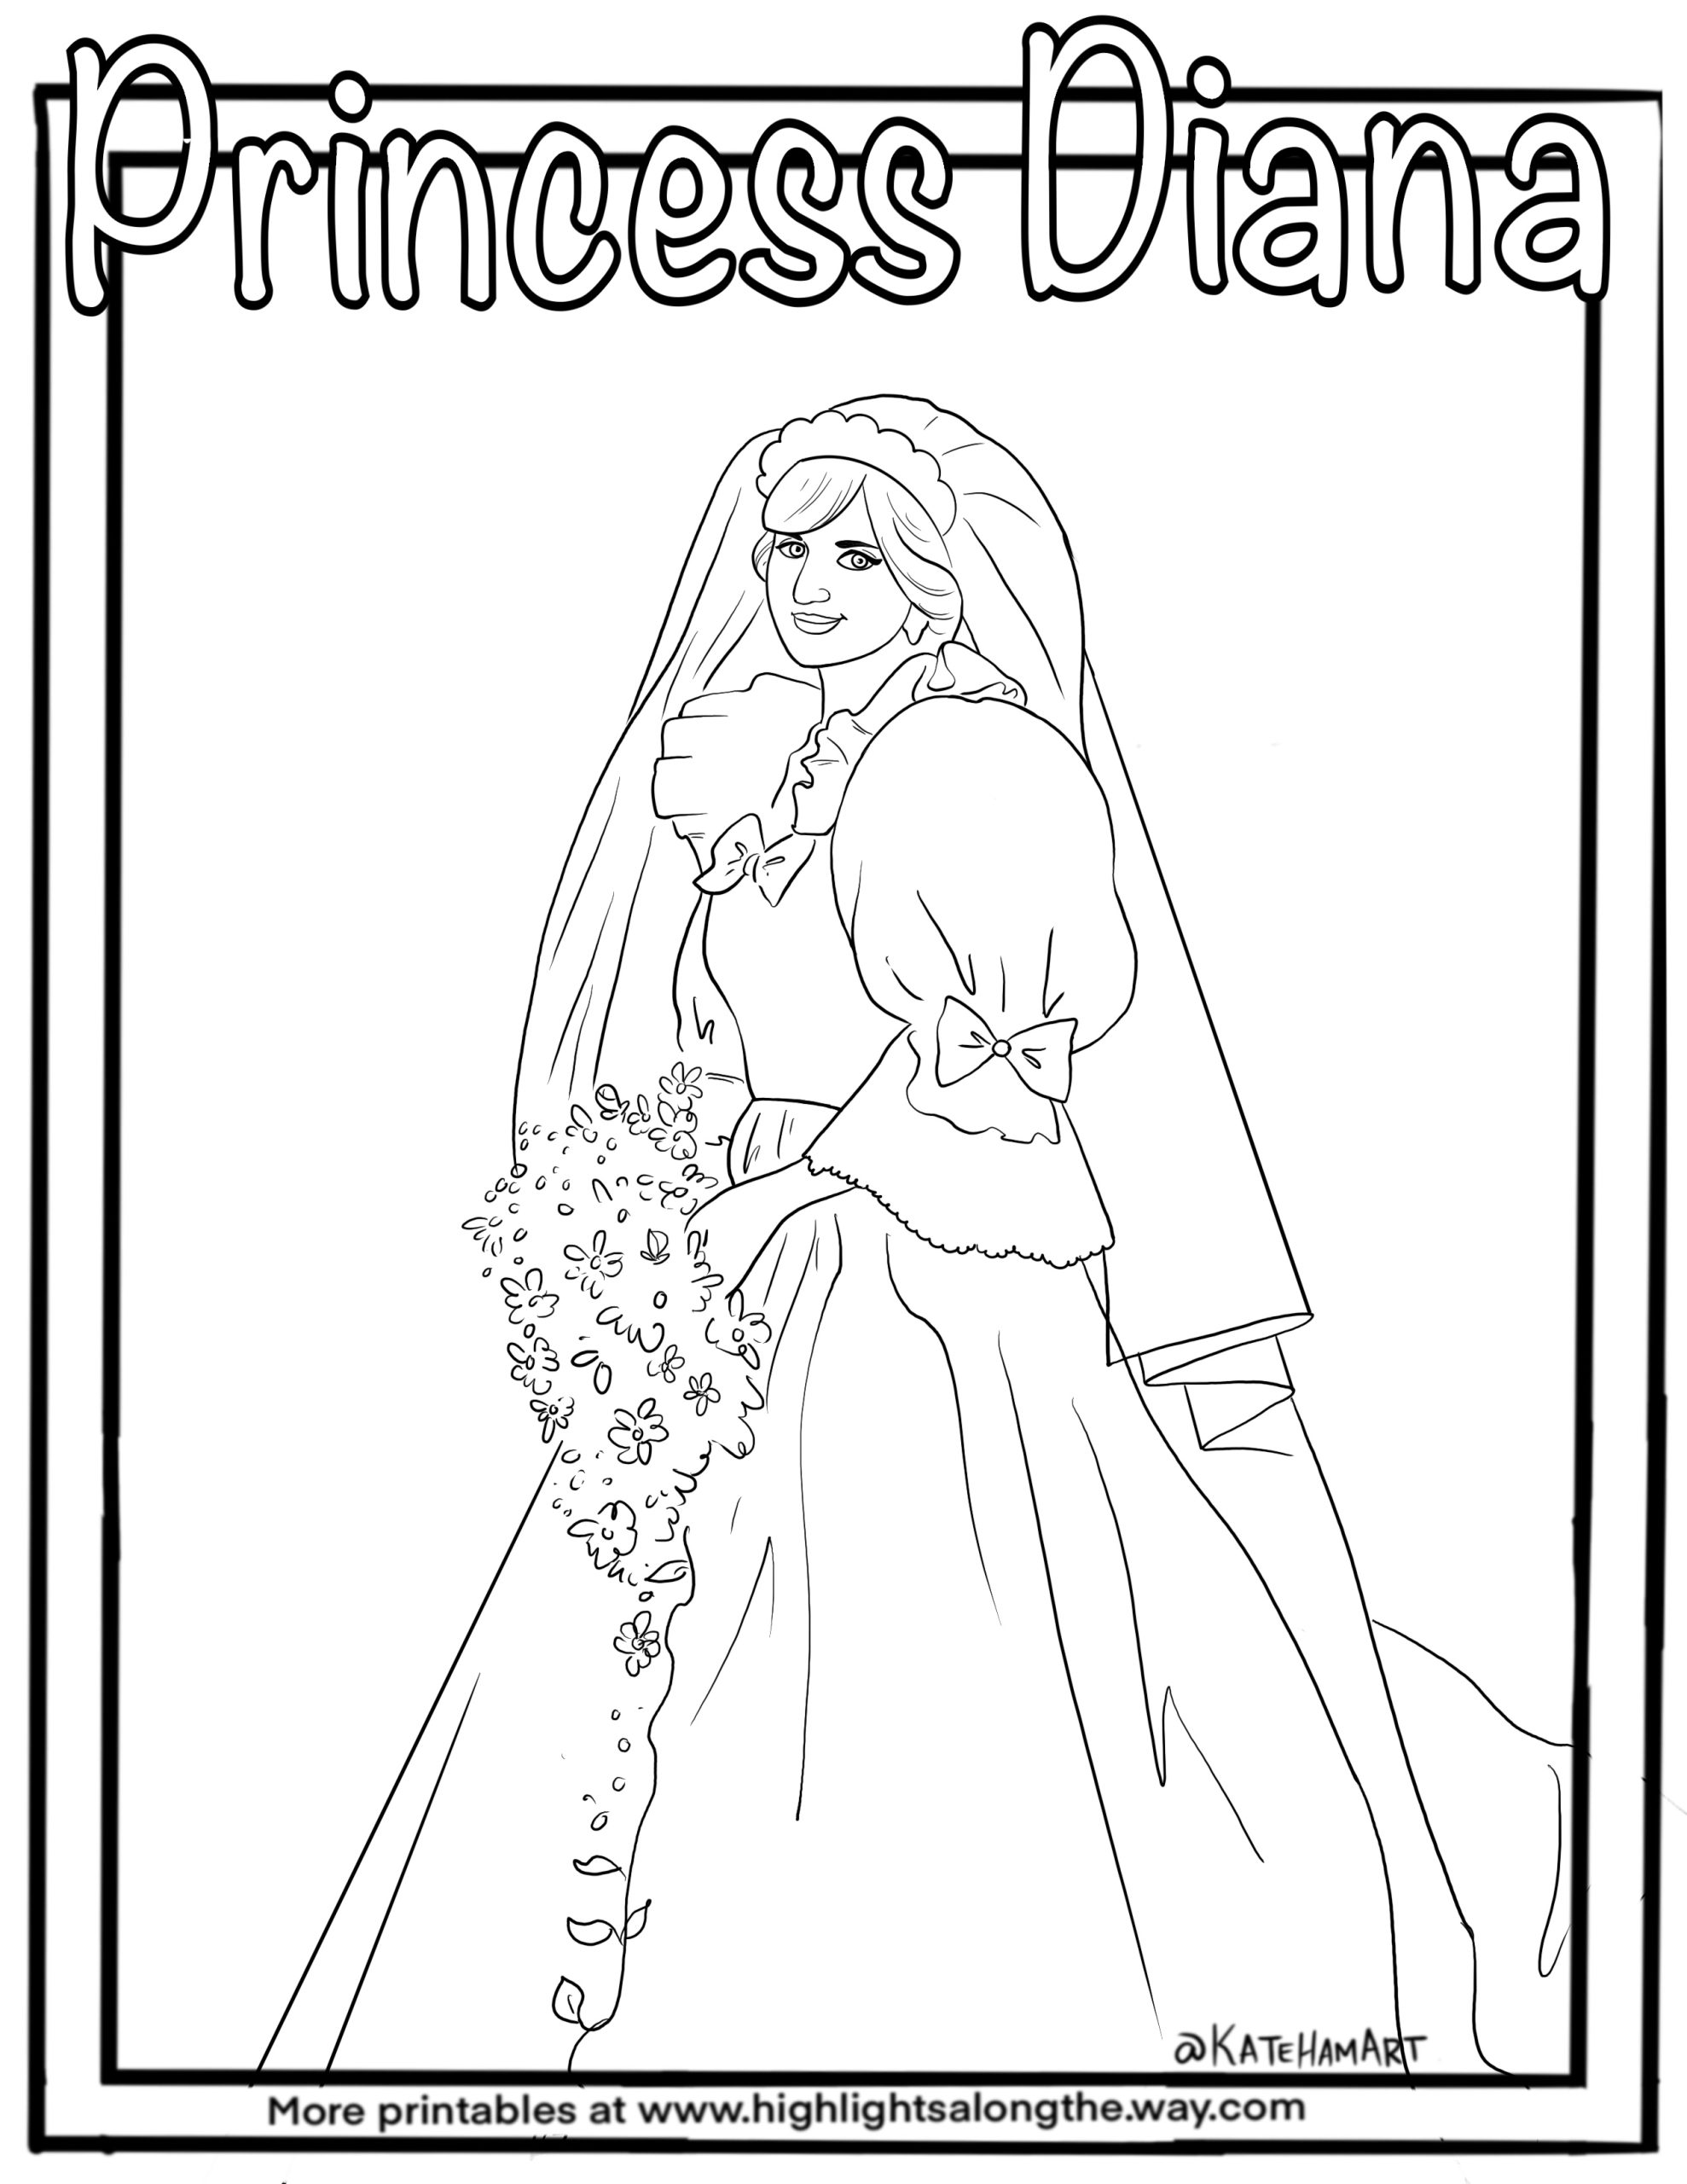 Princess Diana Coloring Pages